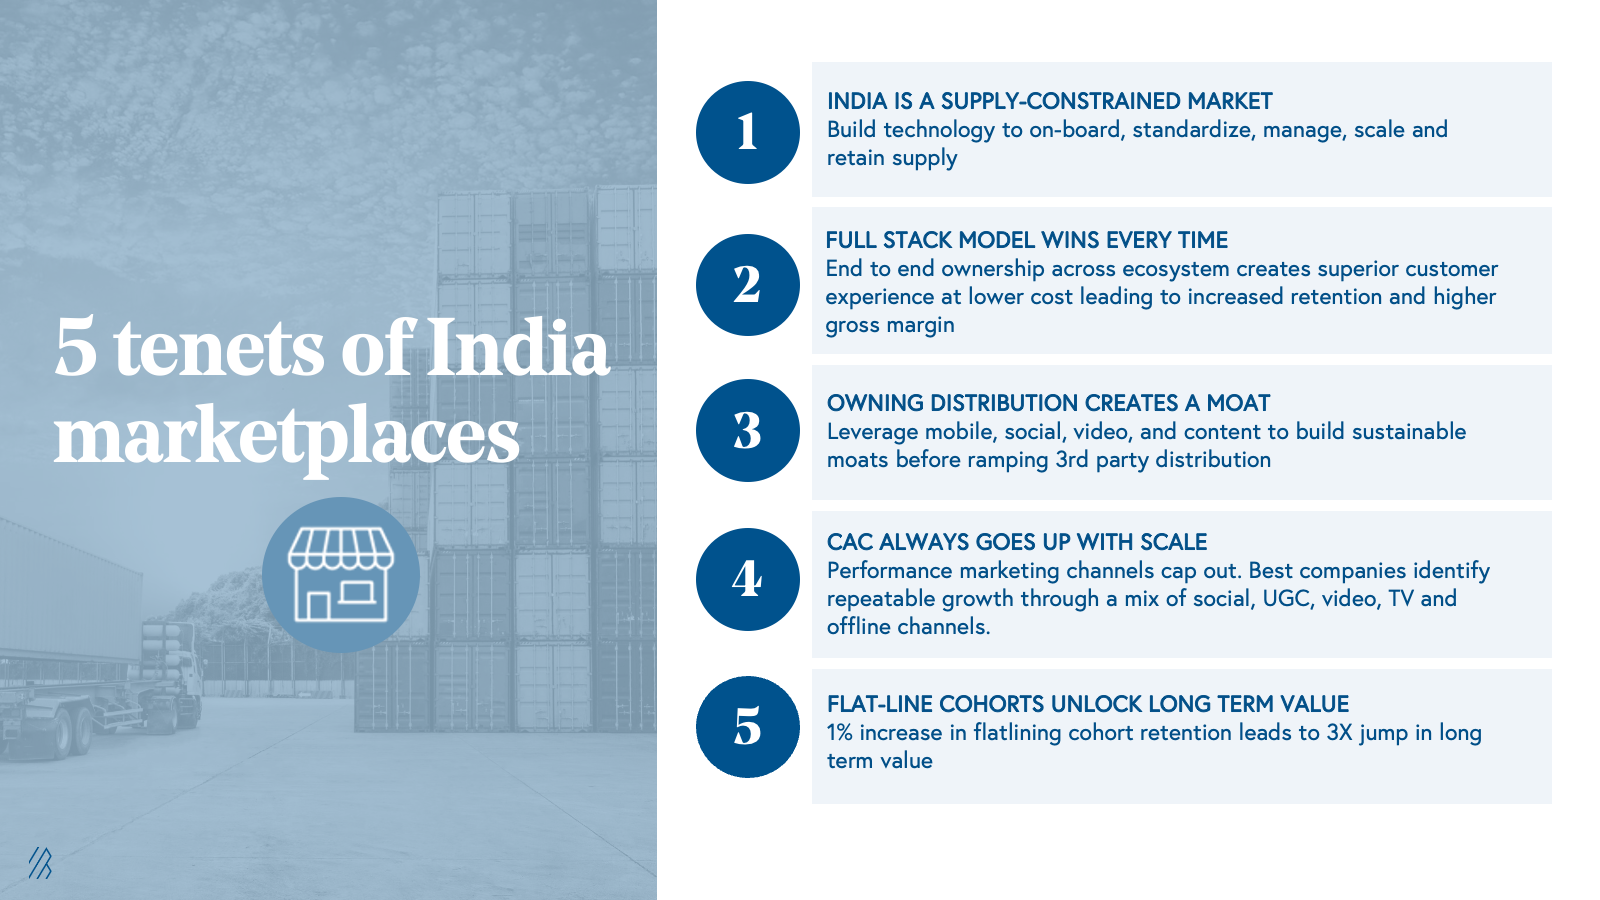 5 tenets of India marketplaces